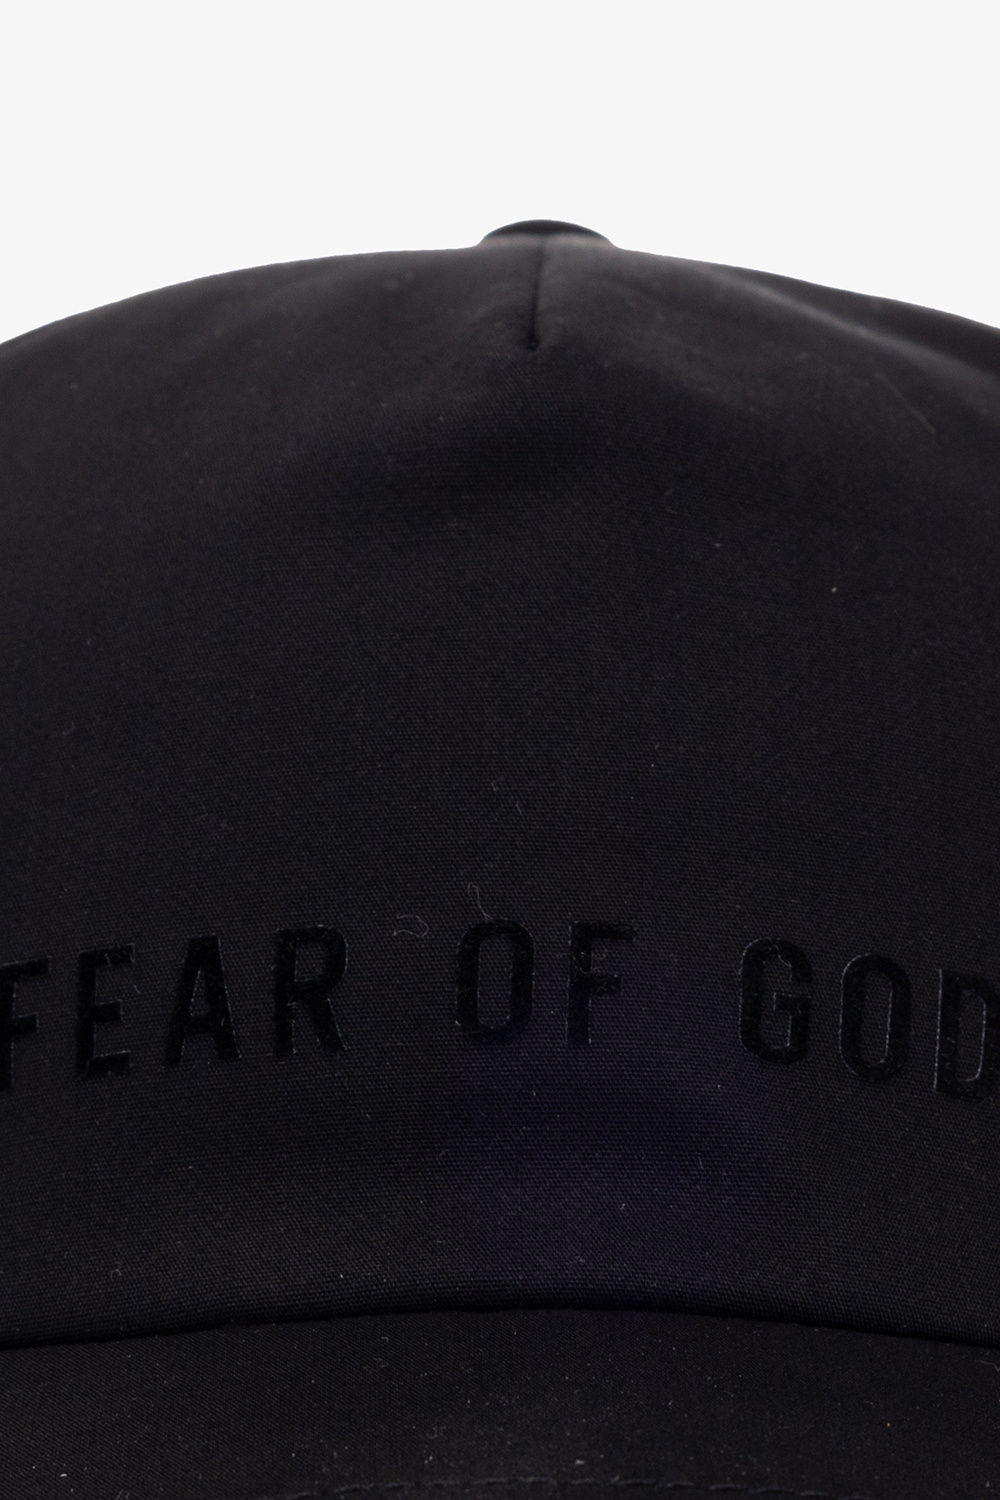 Fear Of God Baseball cap